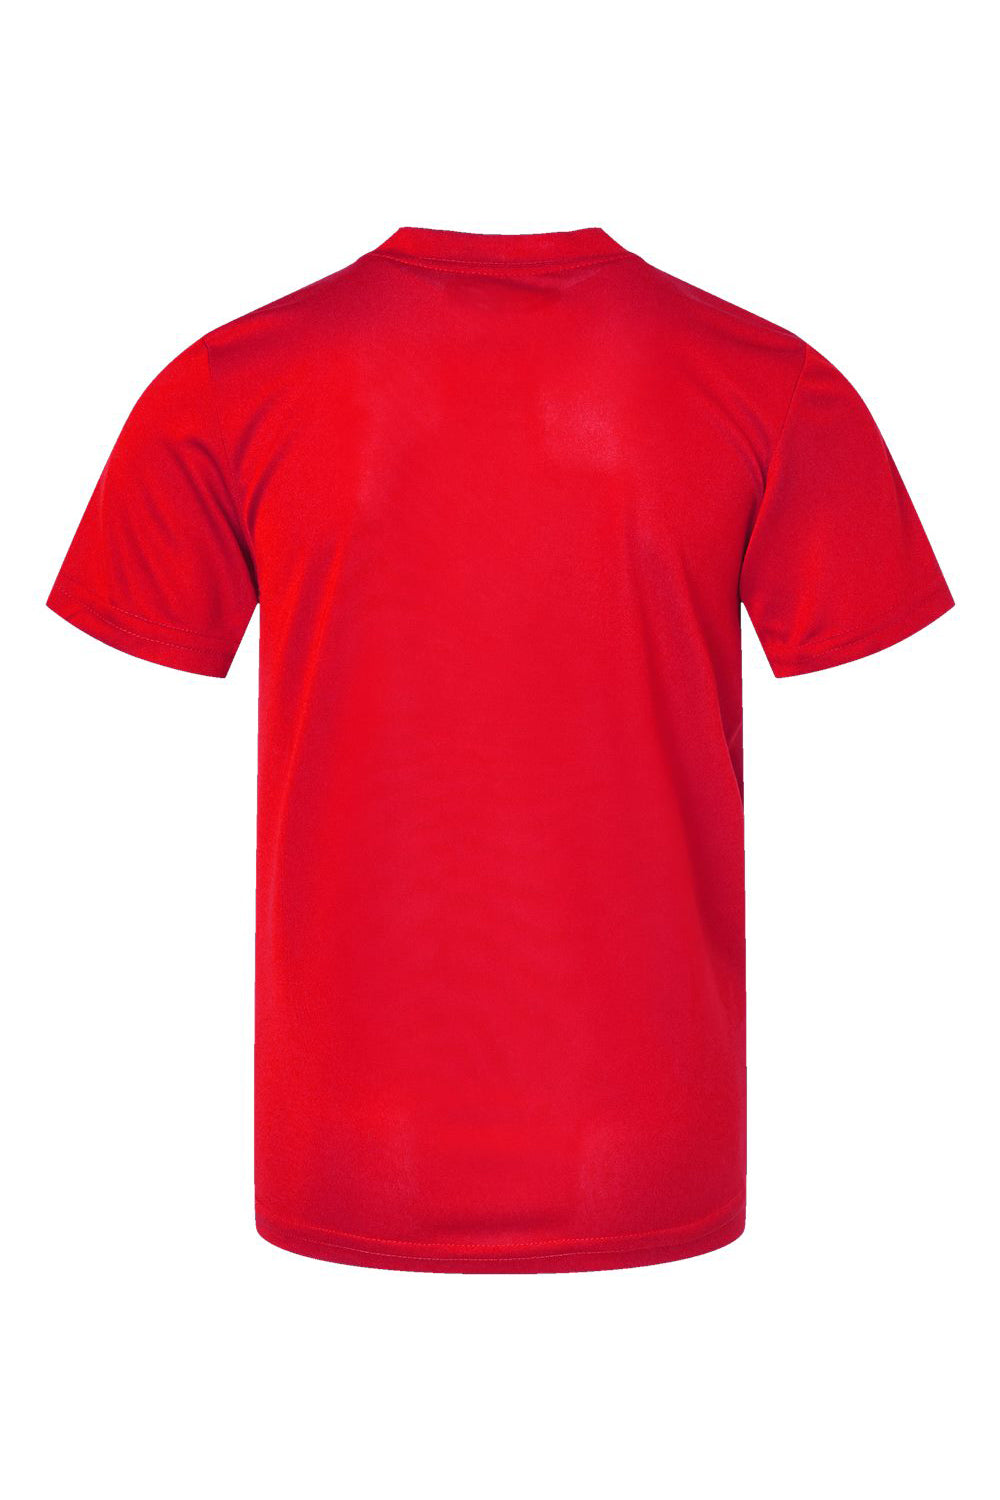 Augusta Sportswear 791 Youth Nexgen Moisture Wicking Short Sleeve Crewneck T-Shirt Scarlet Red Flat Back